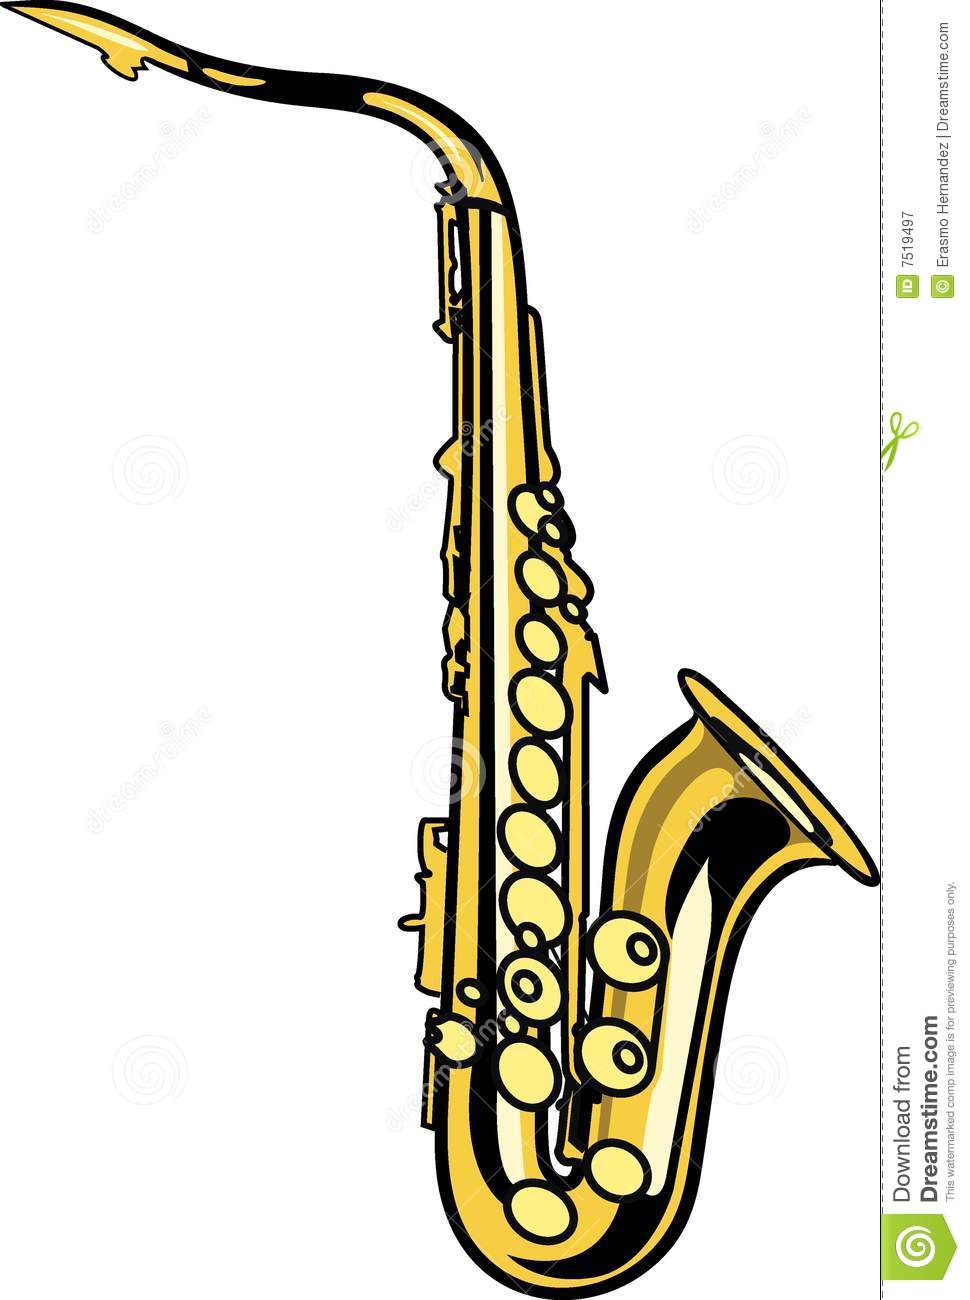 Saxophone Royalty Free Stock Photography   Image  7519497